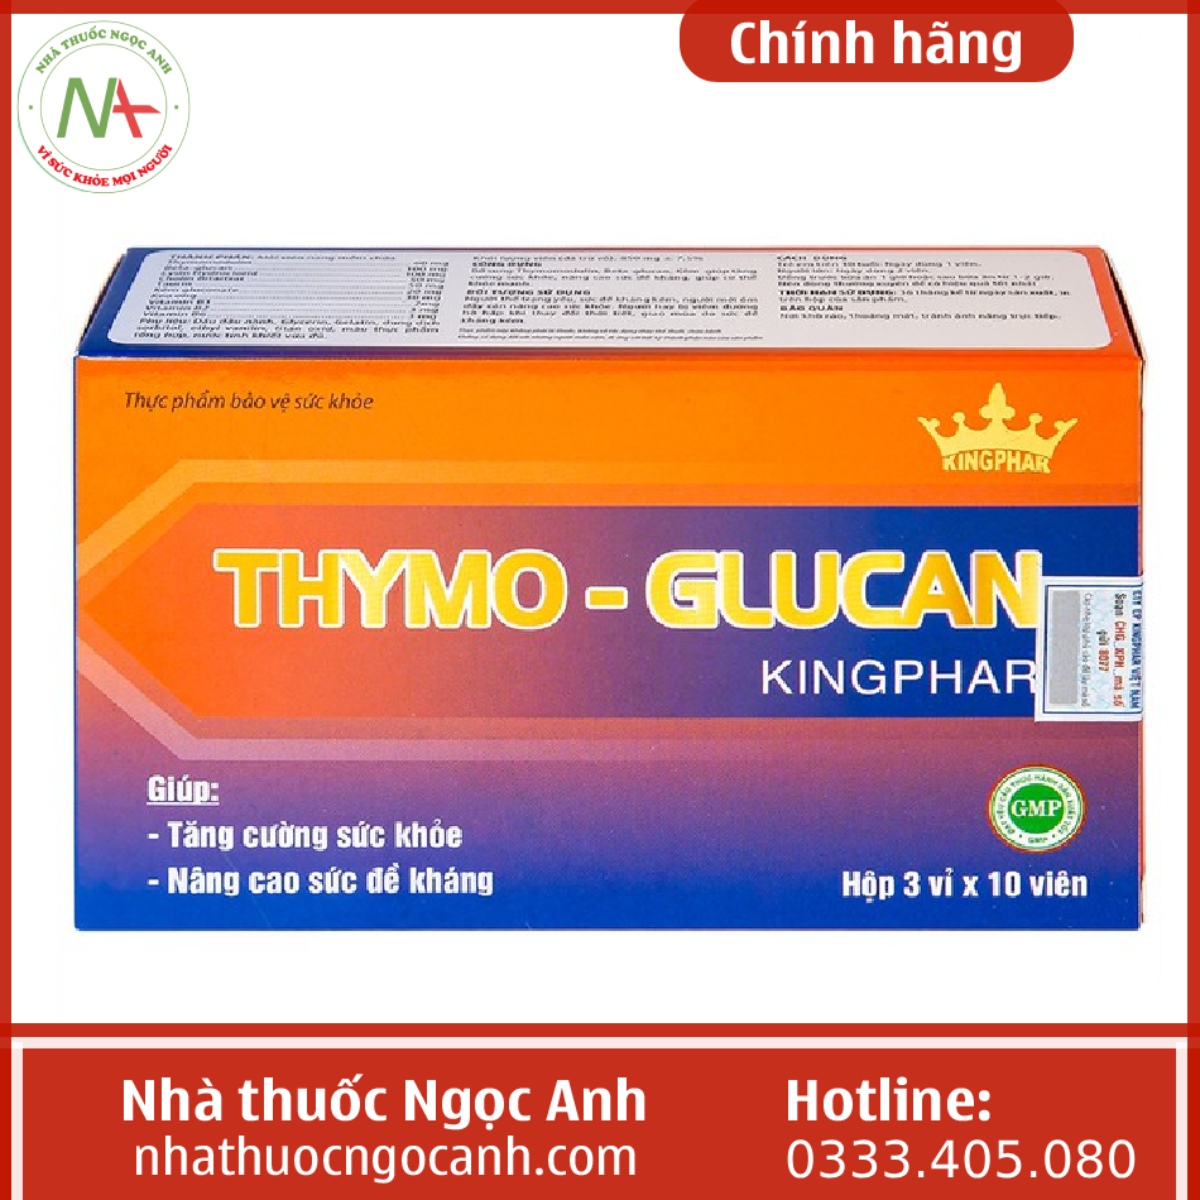 Thymo - Glucan Kingphar